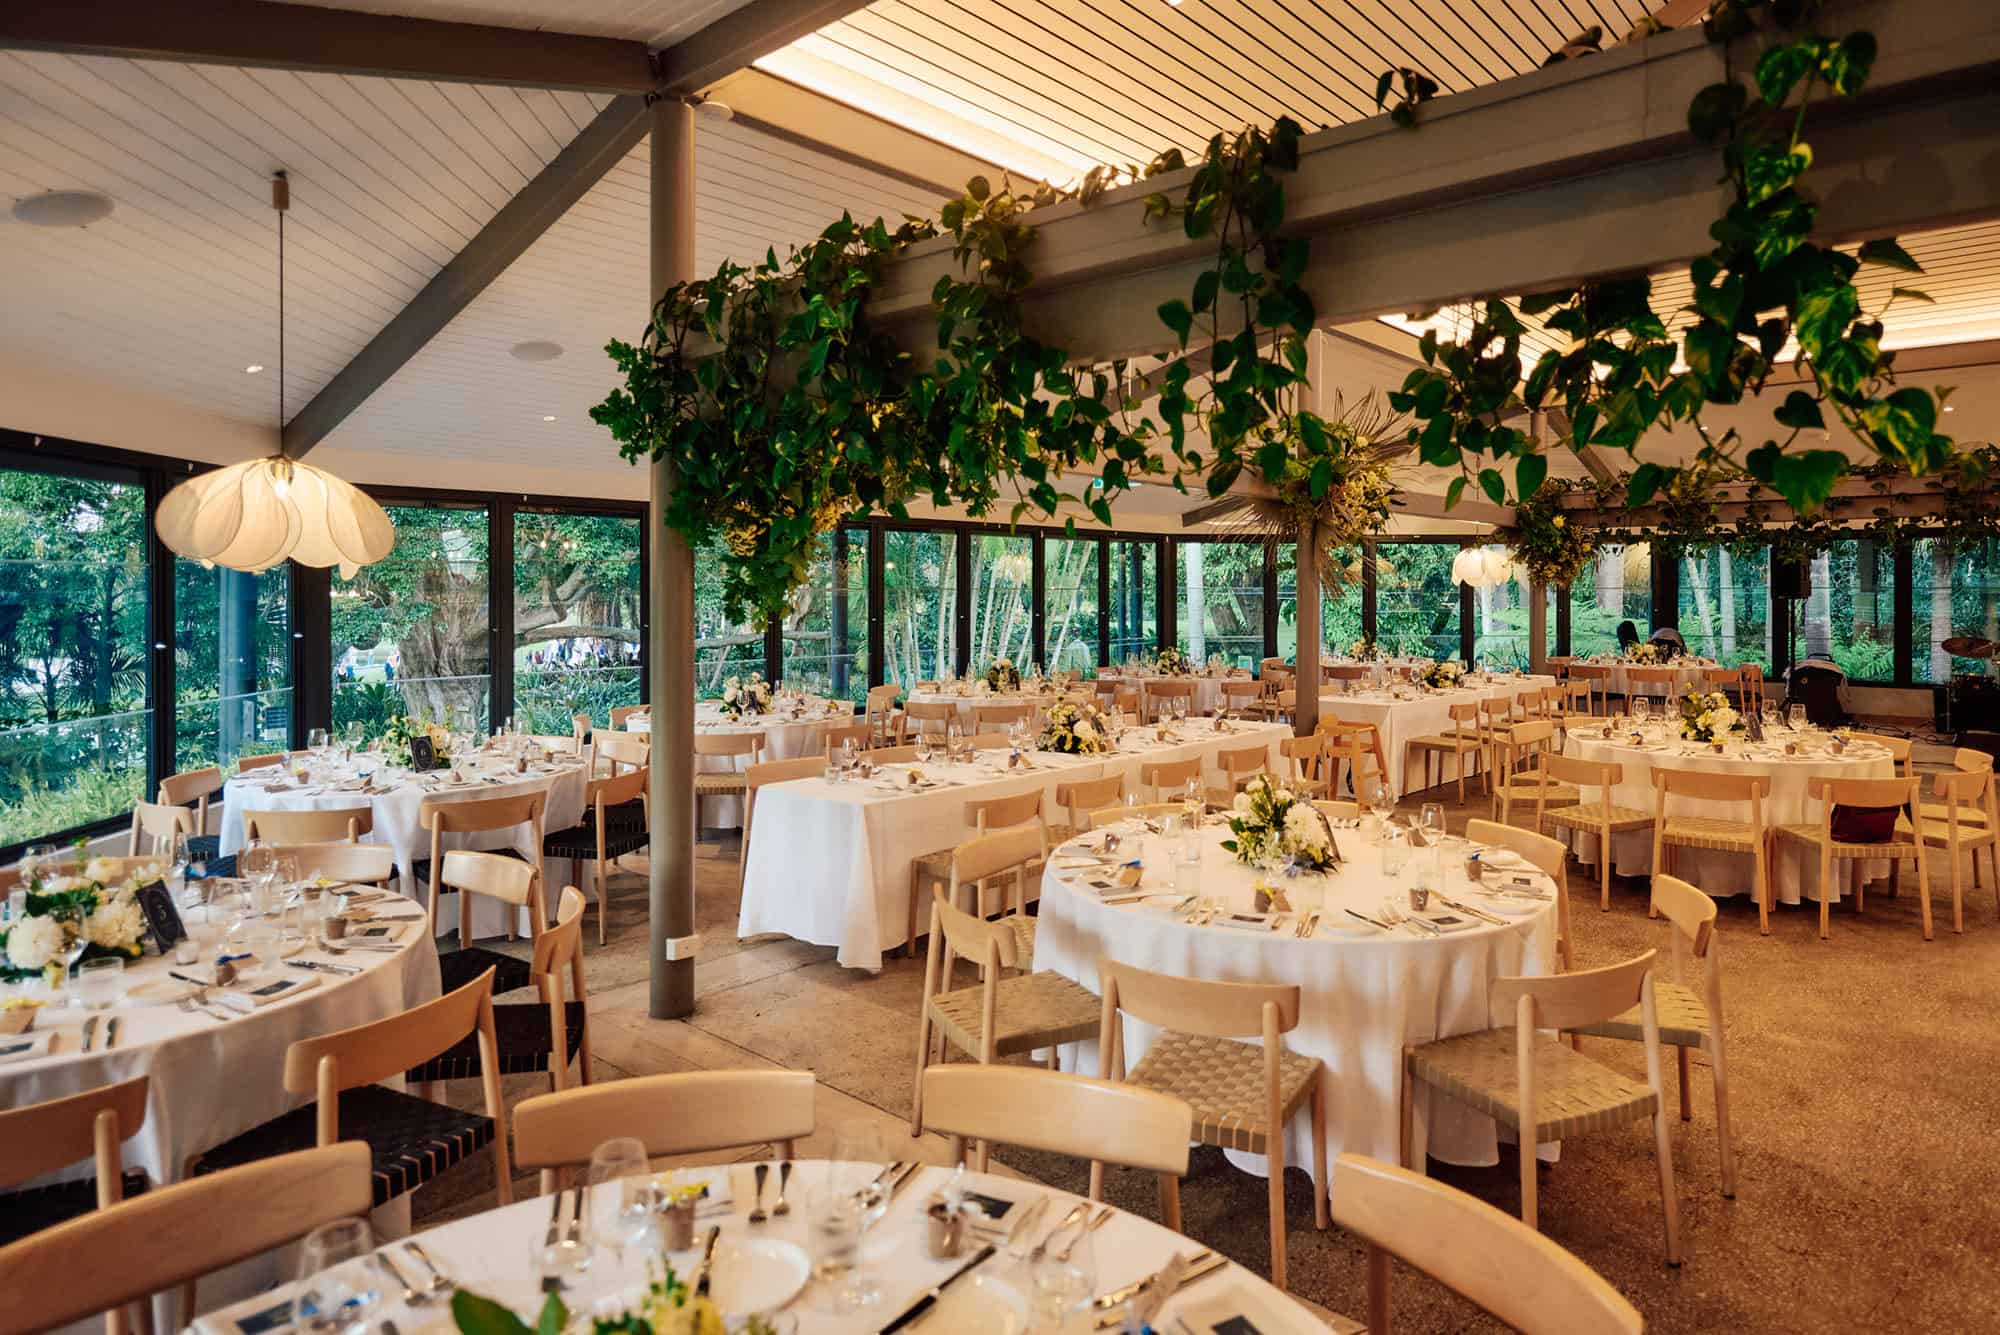 Botanic gardens restaurant ready for wedding reception